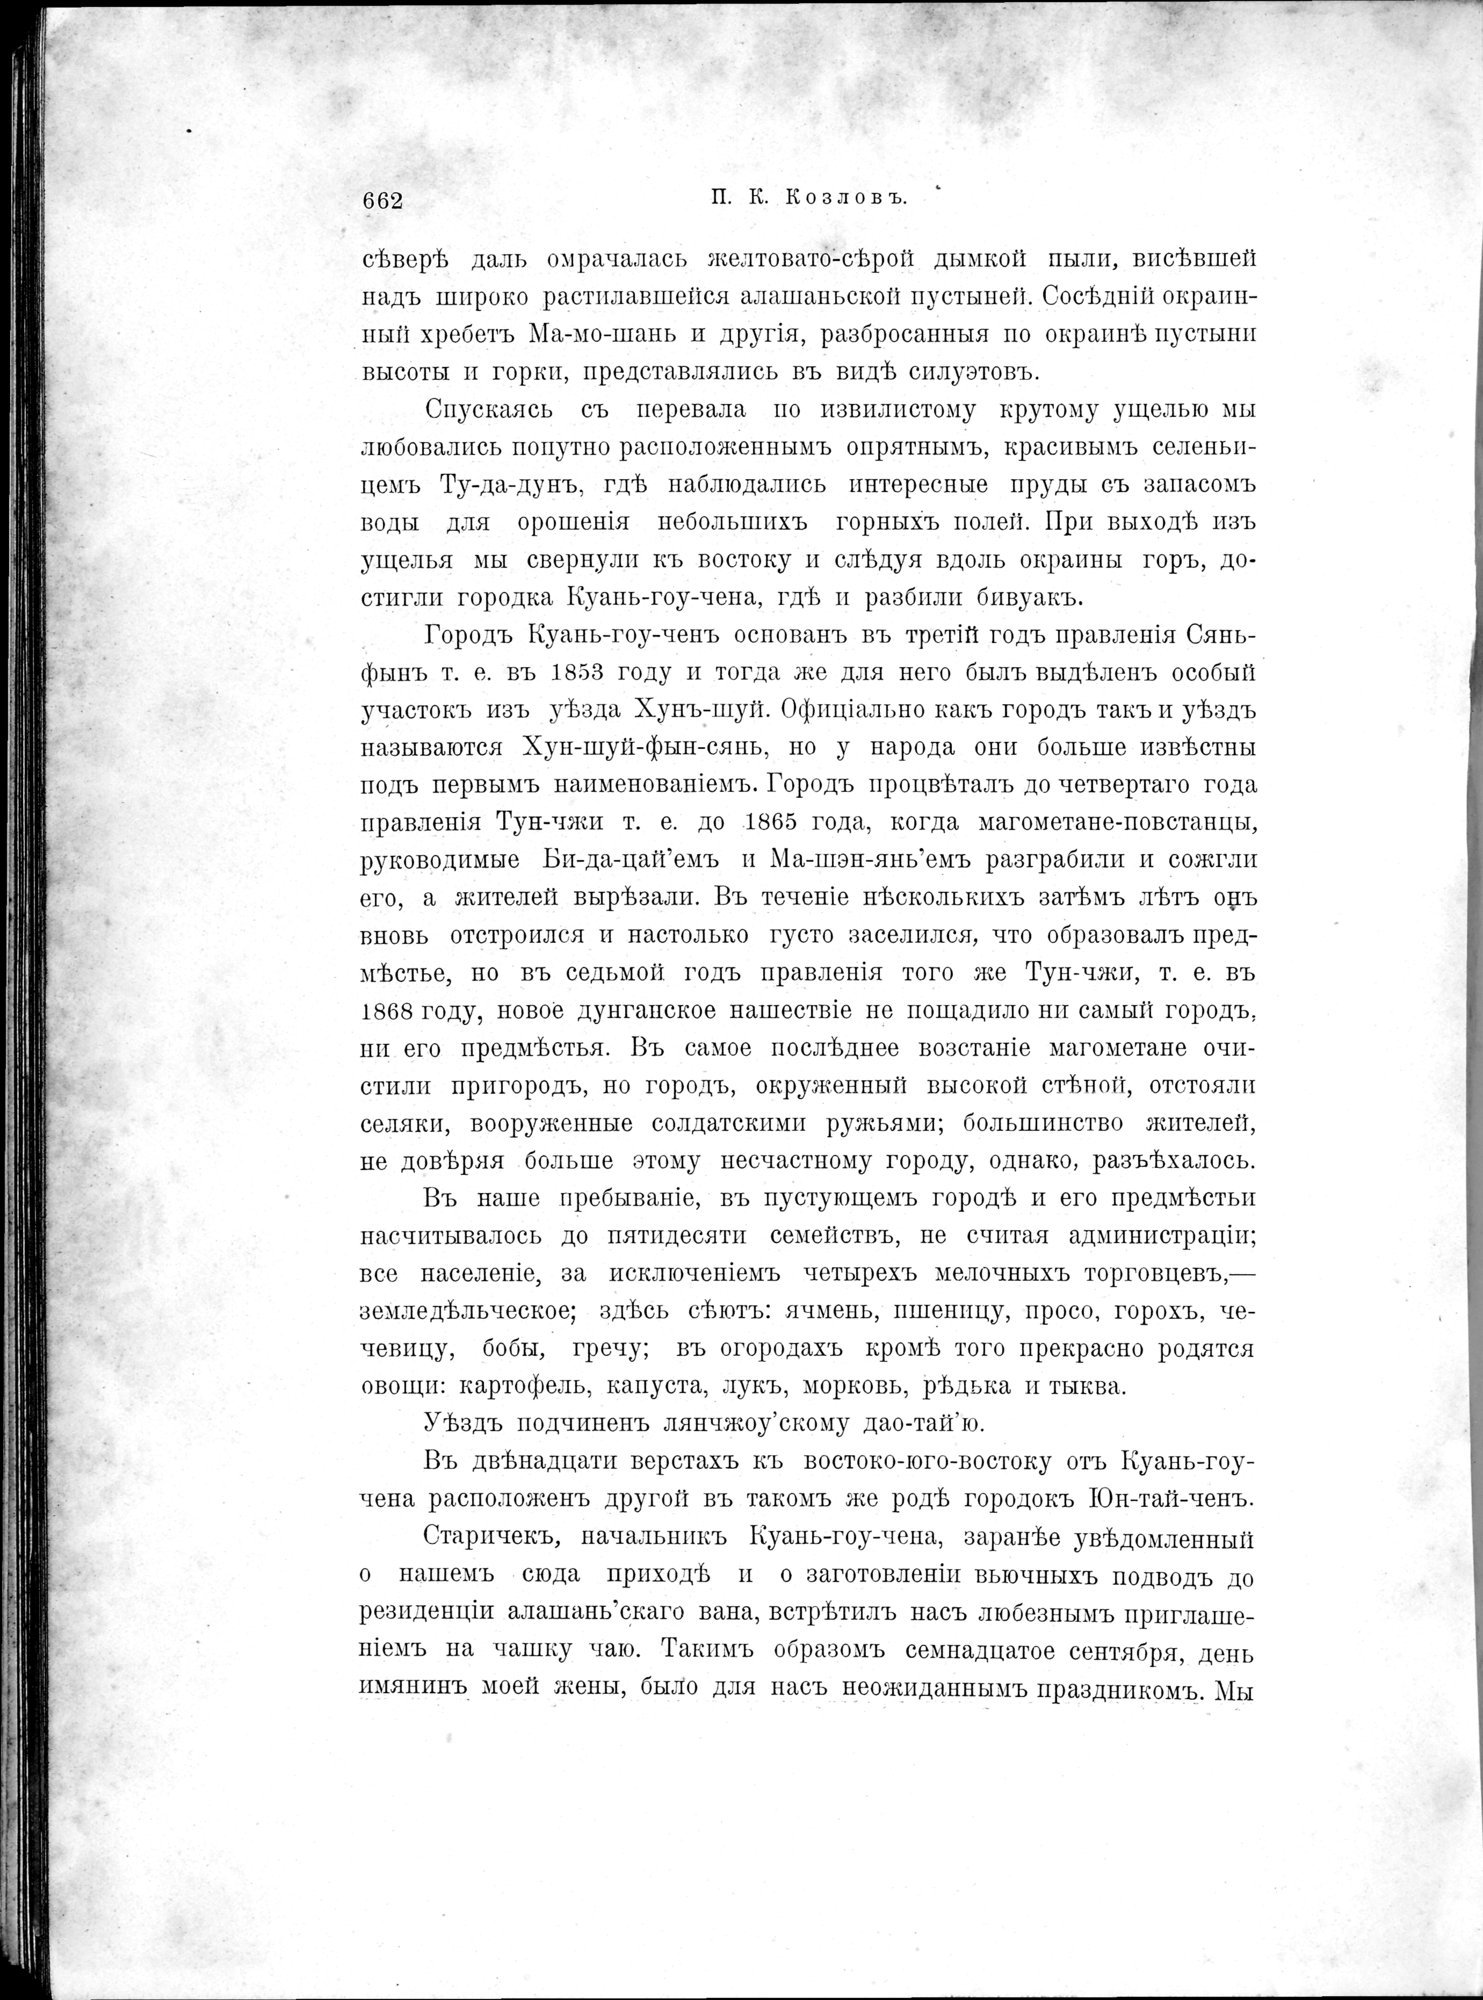 Mongoliia i Kam : vol.2 / Page 494 (Grayscale High Resolution Image)